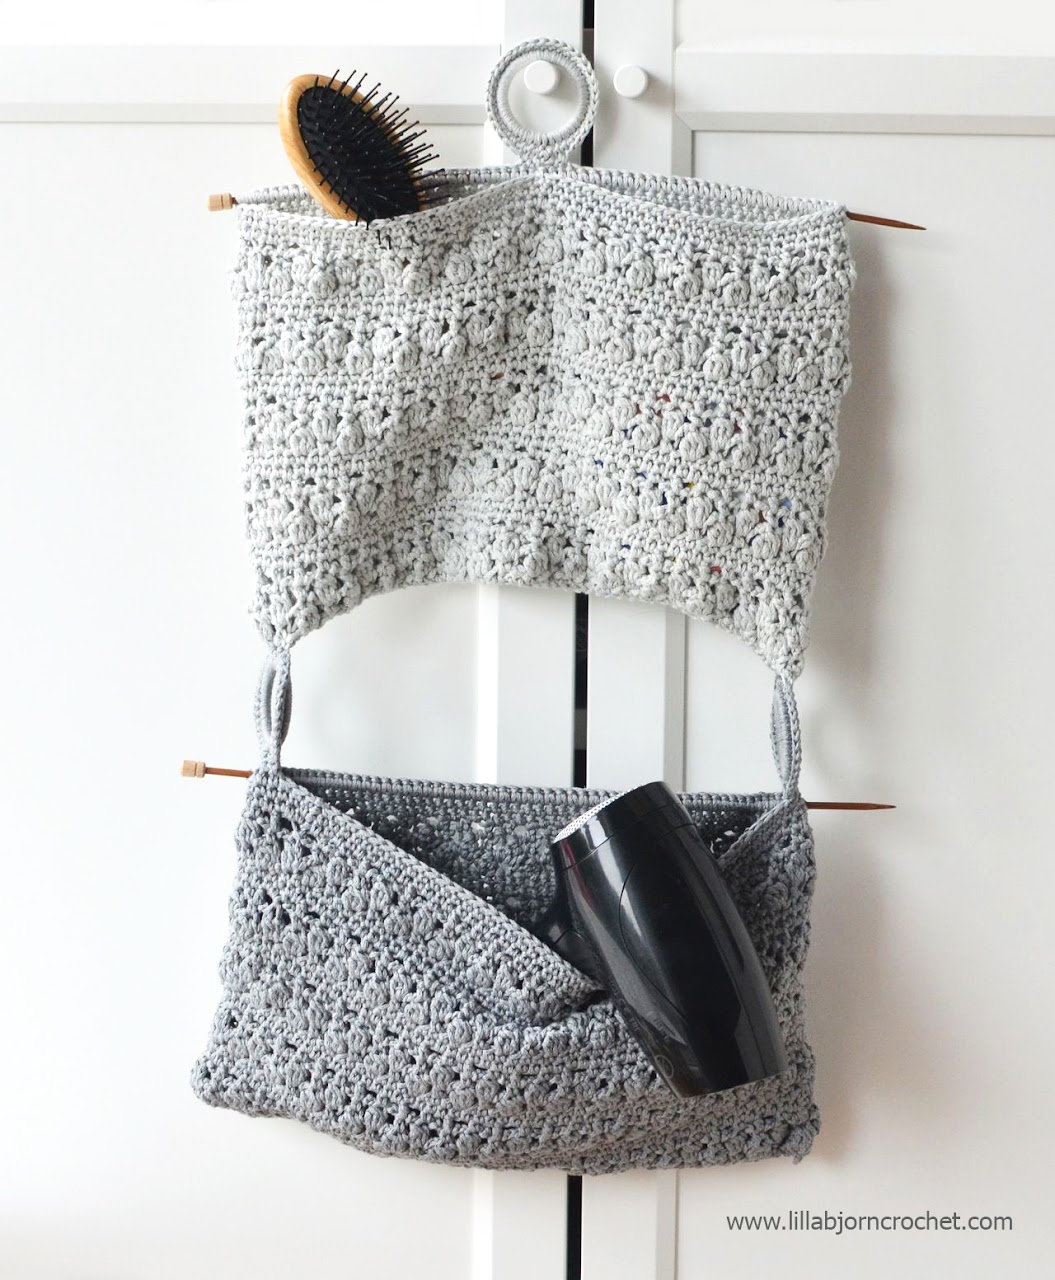 Crocheted Bathroom Organizer - a unique and stylish accessory for every bathroom. Designed by Lilla Bjorn Crochet